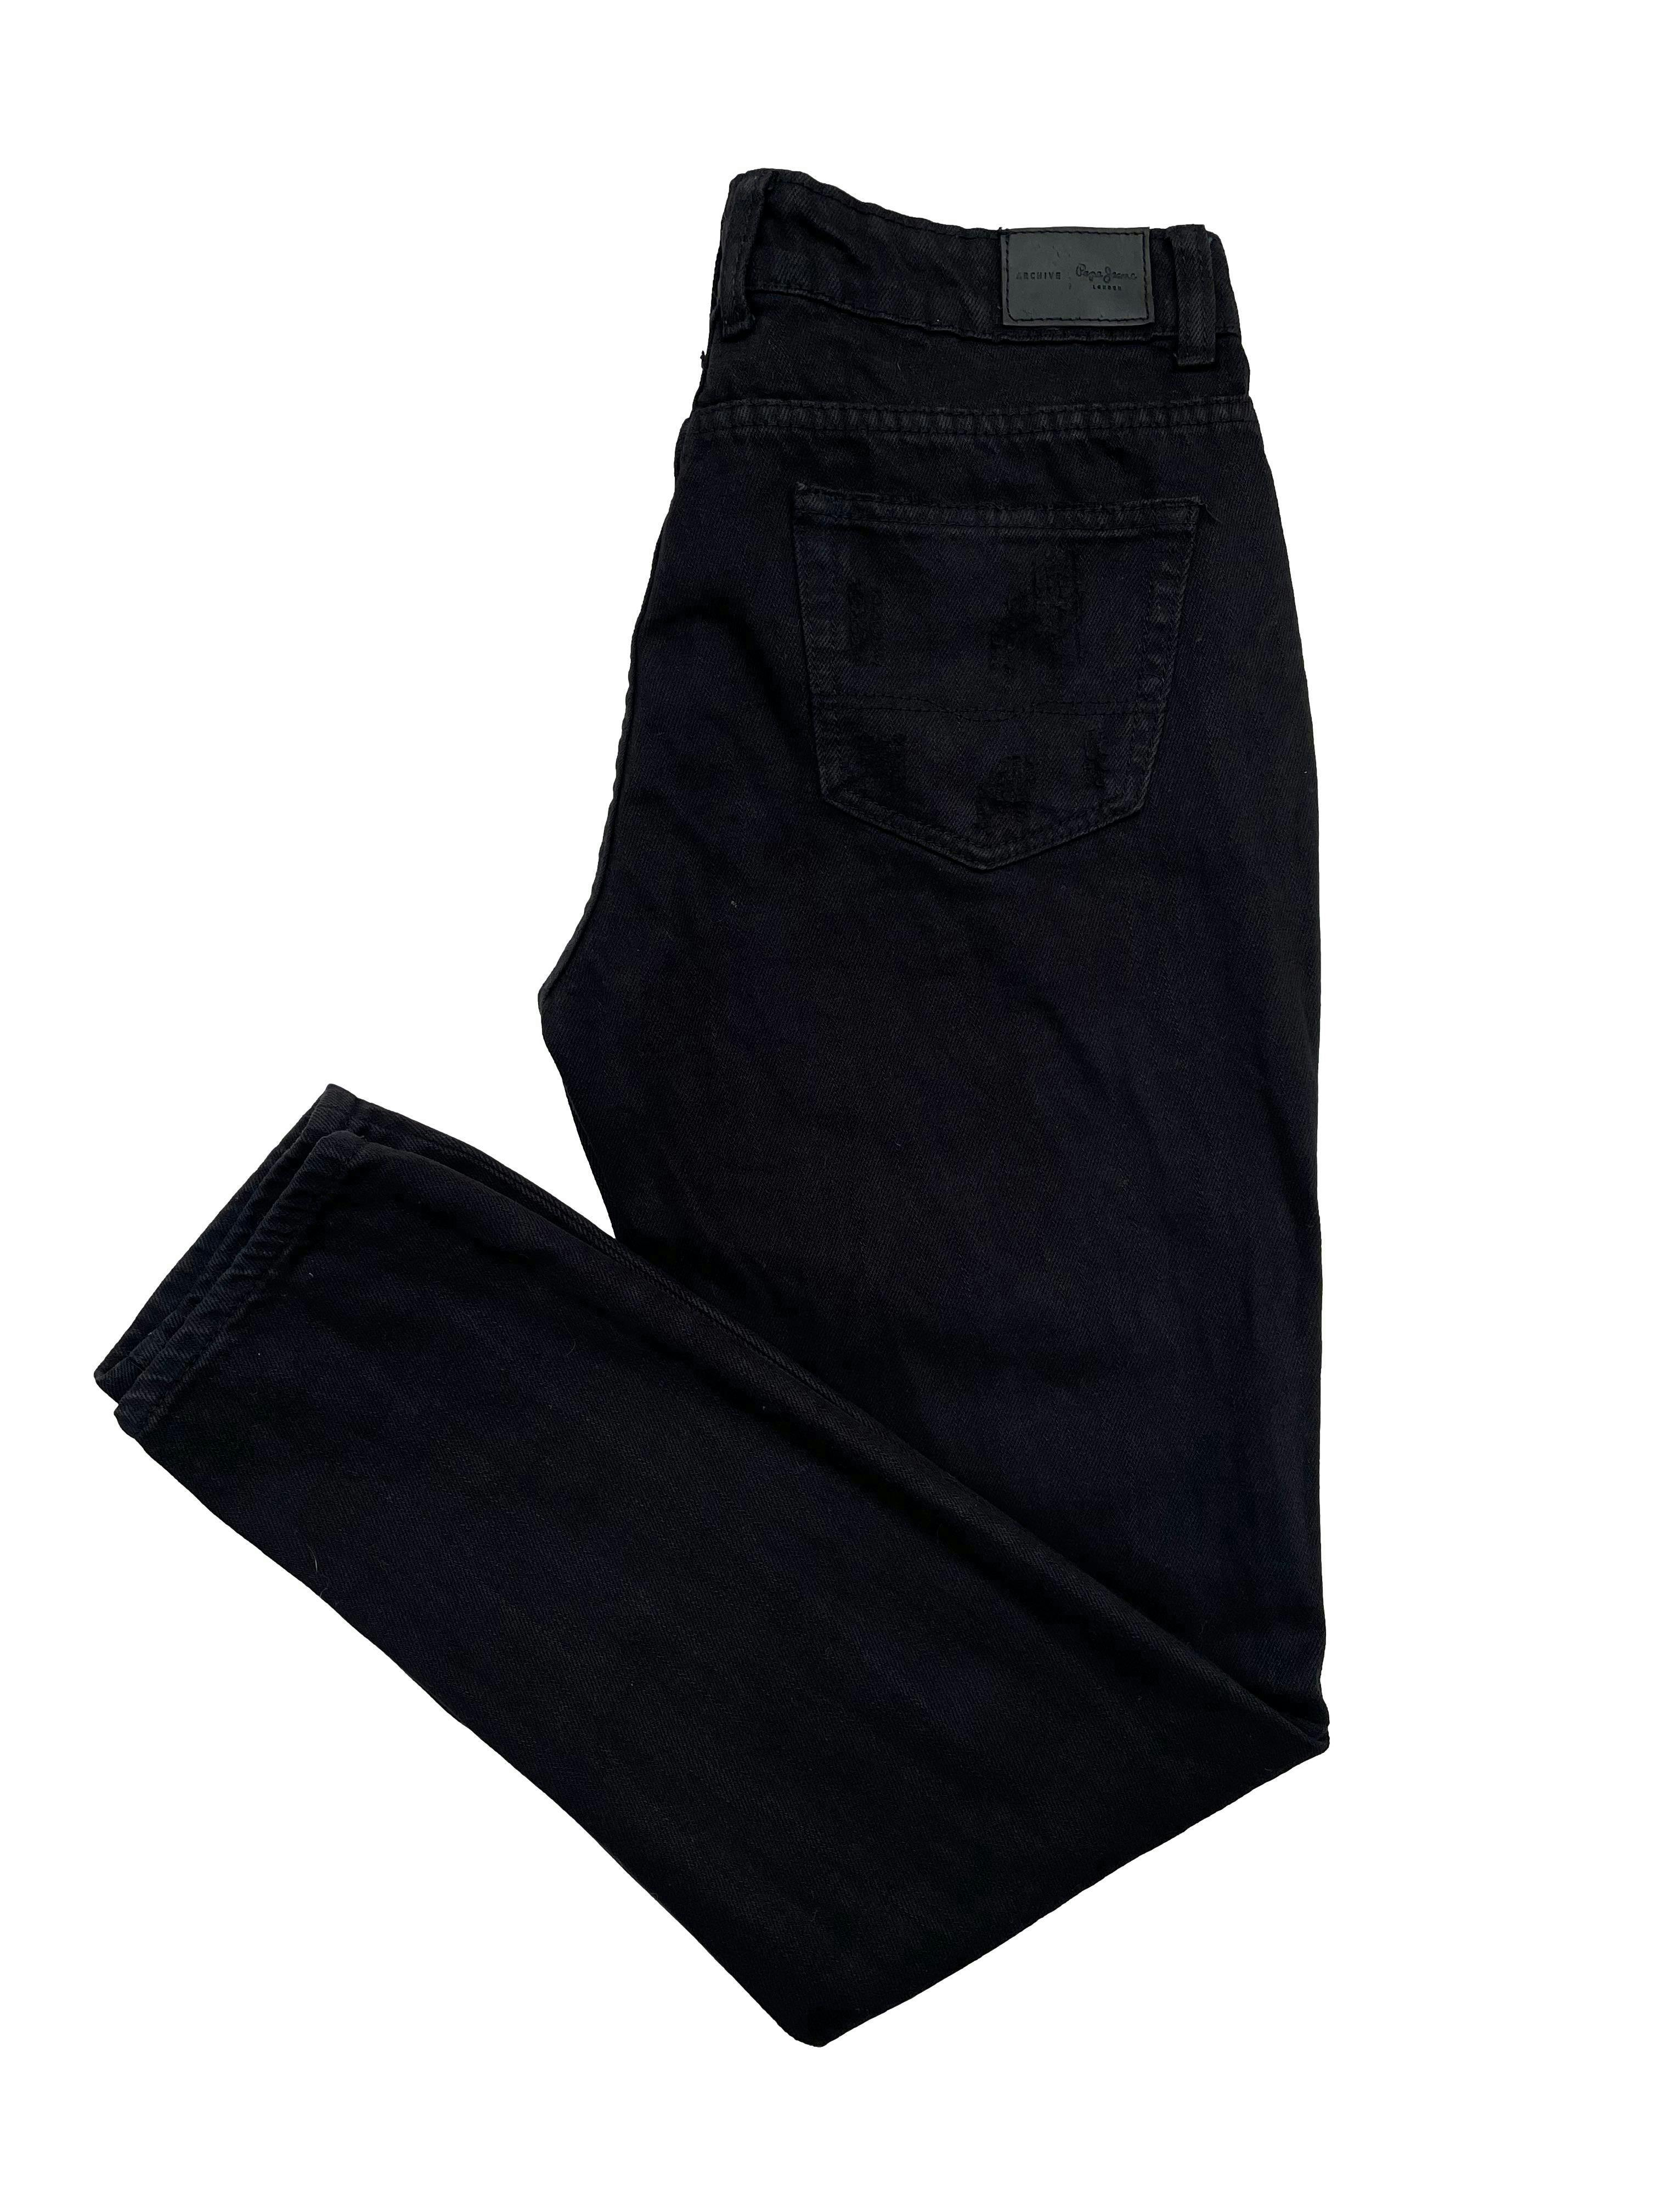 Pantalón negro Pepe Jeans 100% algodón, corte slim de tiro medio con rasgados .Cintura 76cm, Largo 94cm.